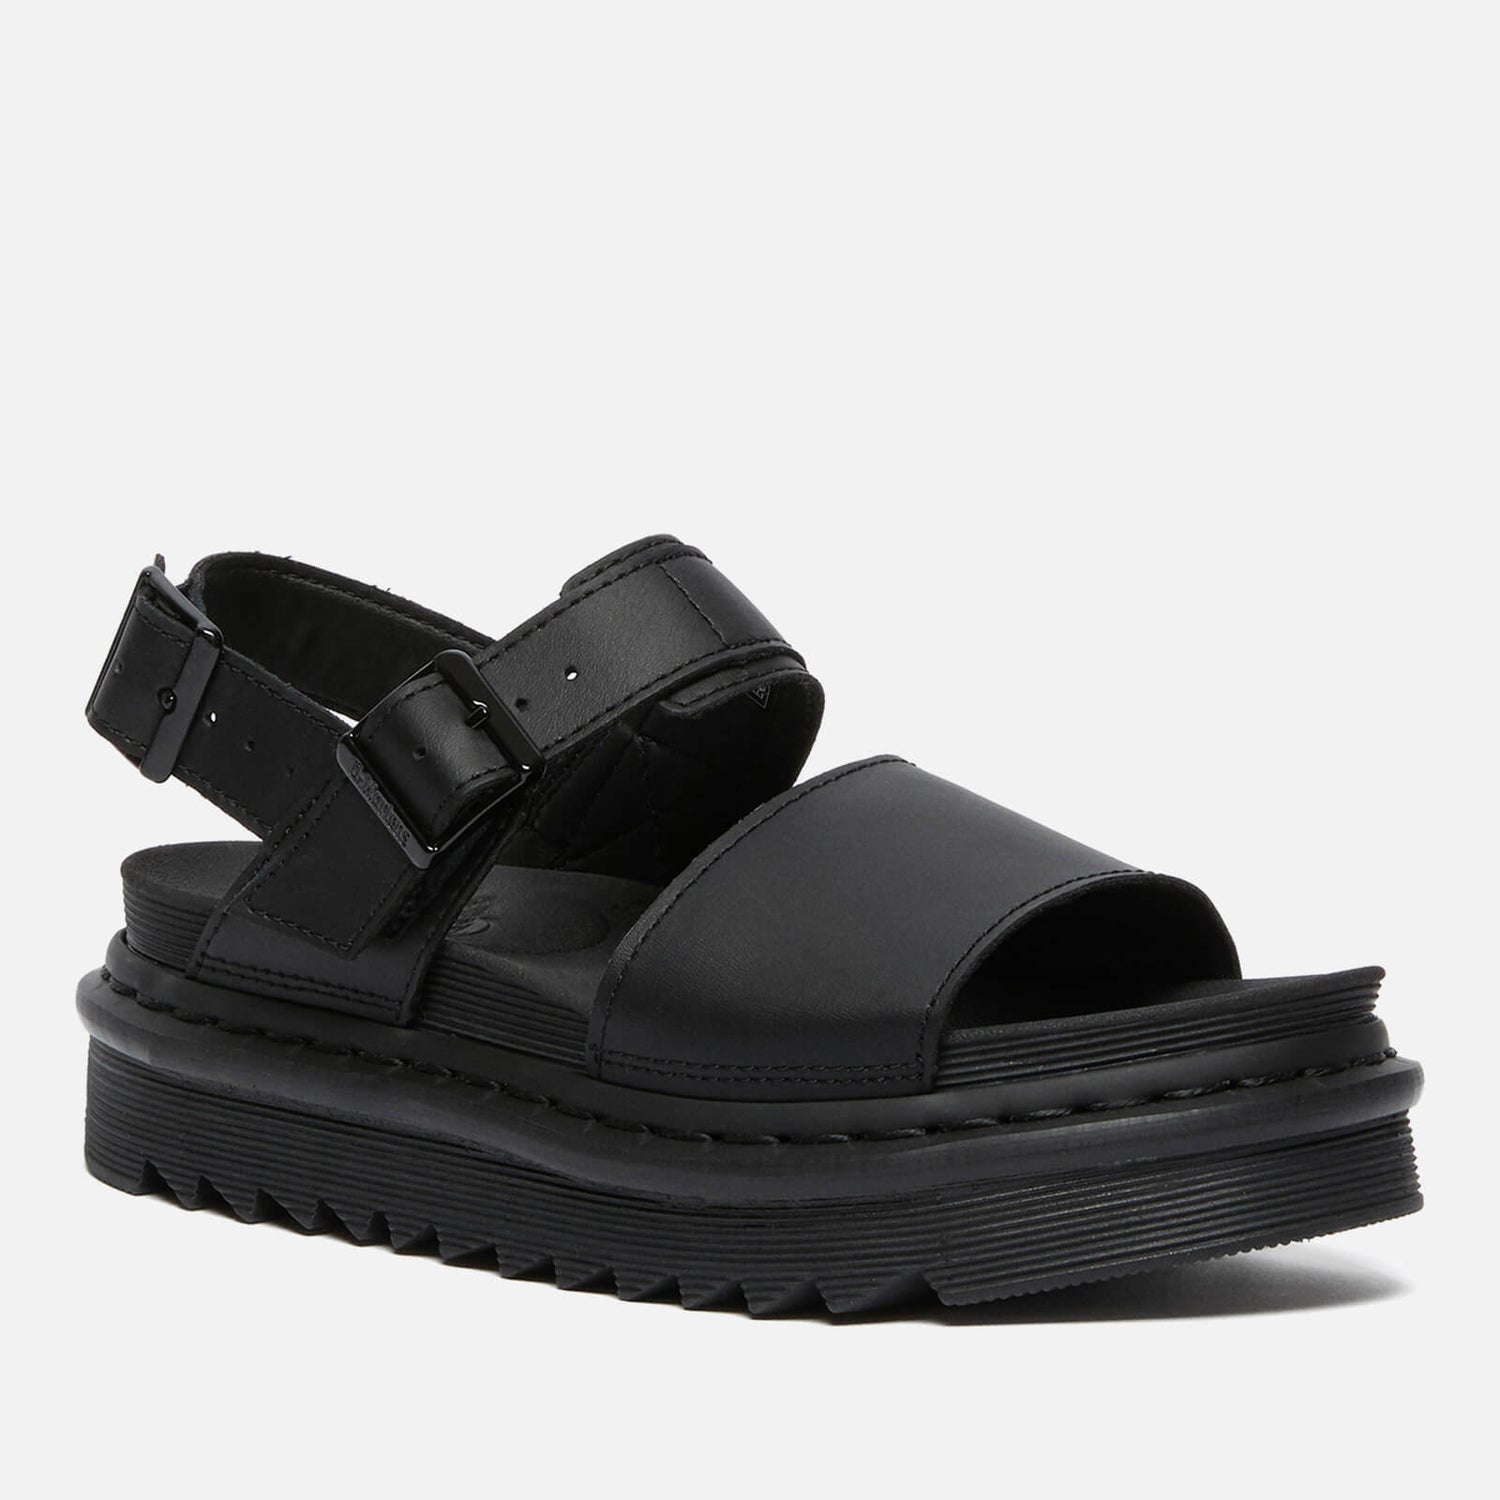 Dr. Martens Women's Voss Leather Strap Sandals - Black - UK 5